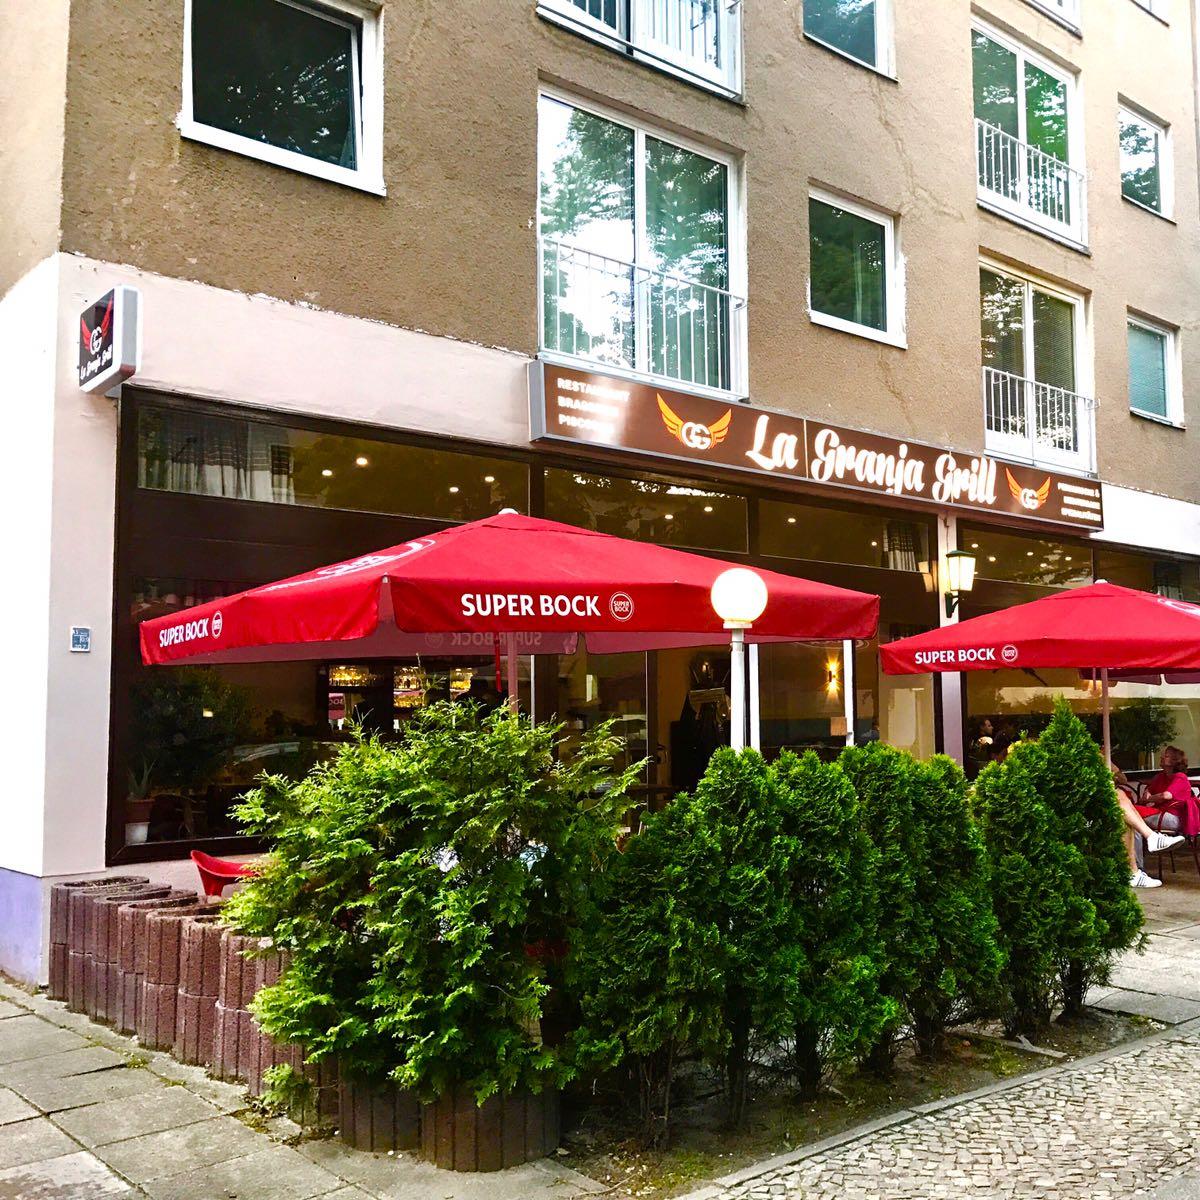 Restaurant "La Granja Grill" in Berlin